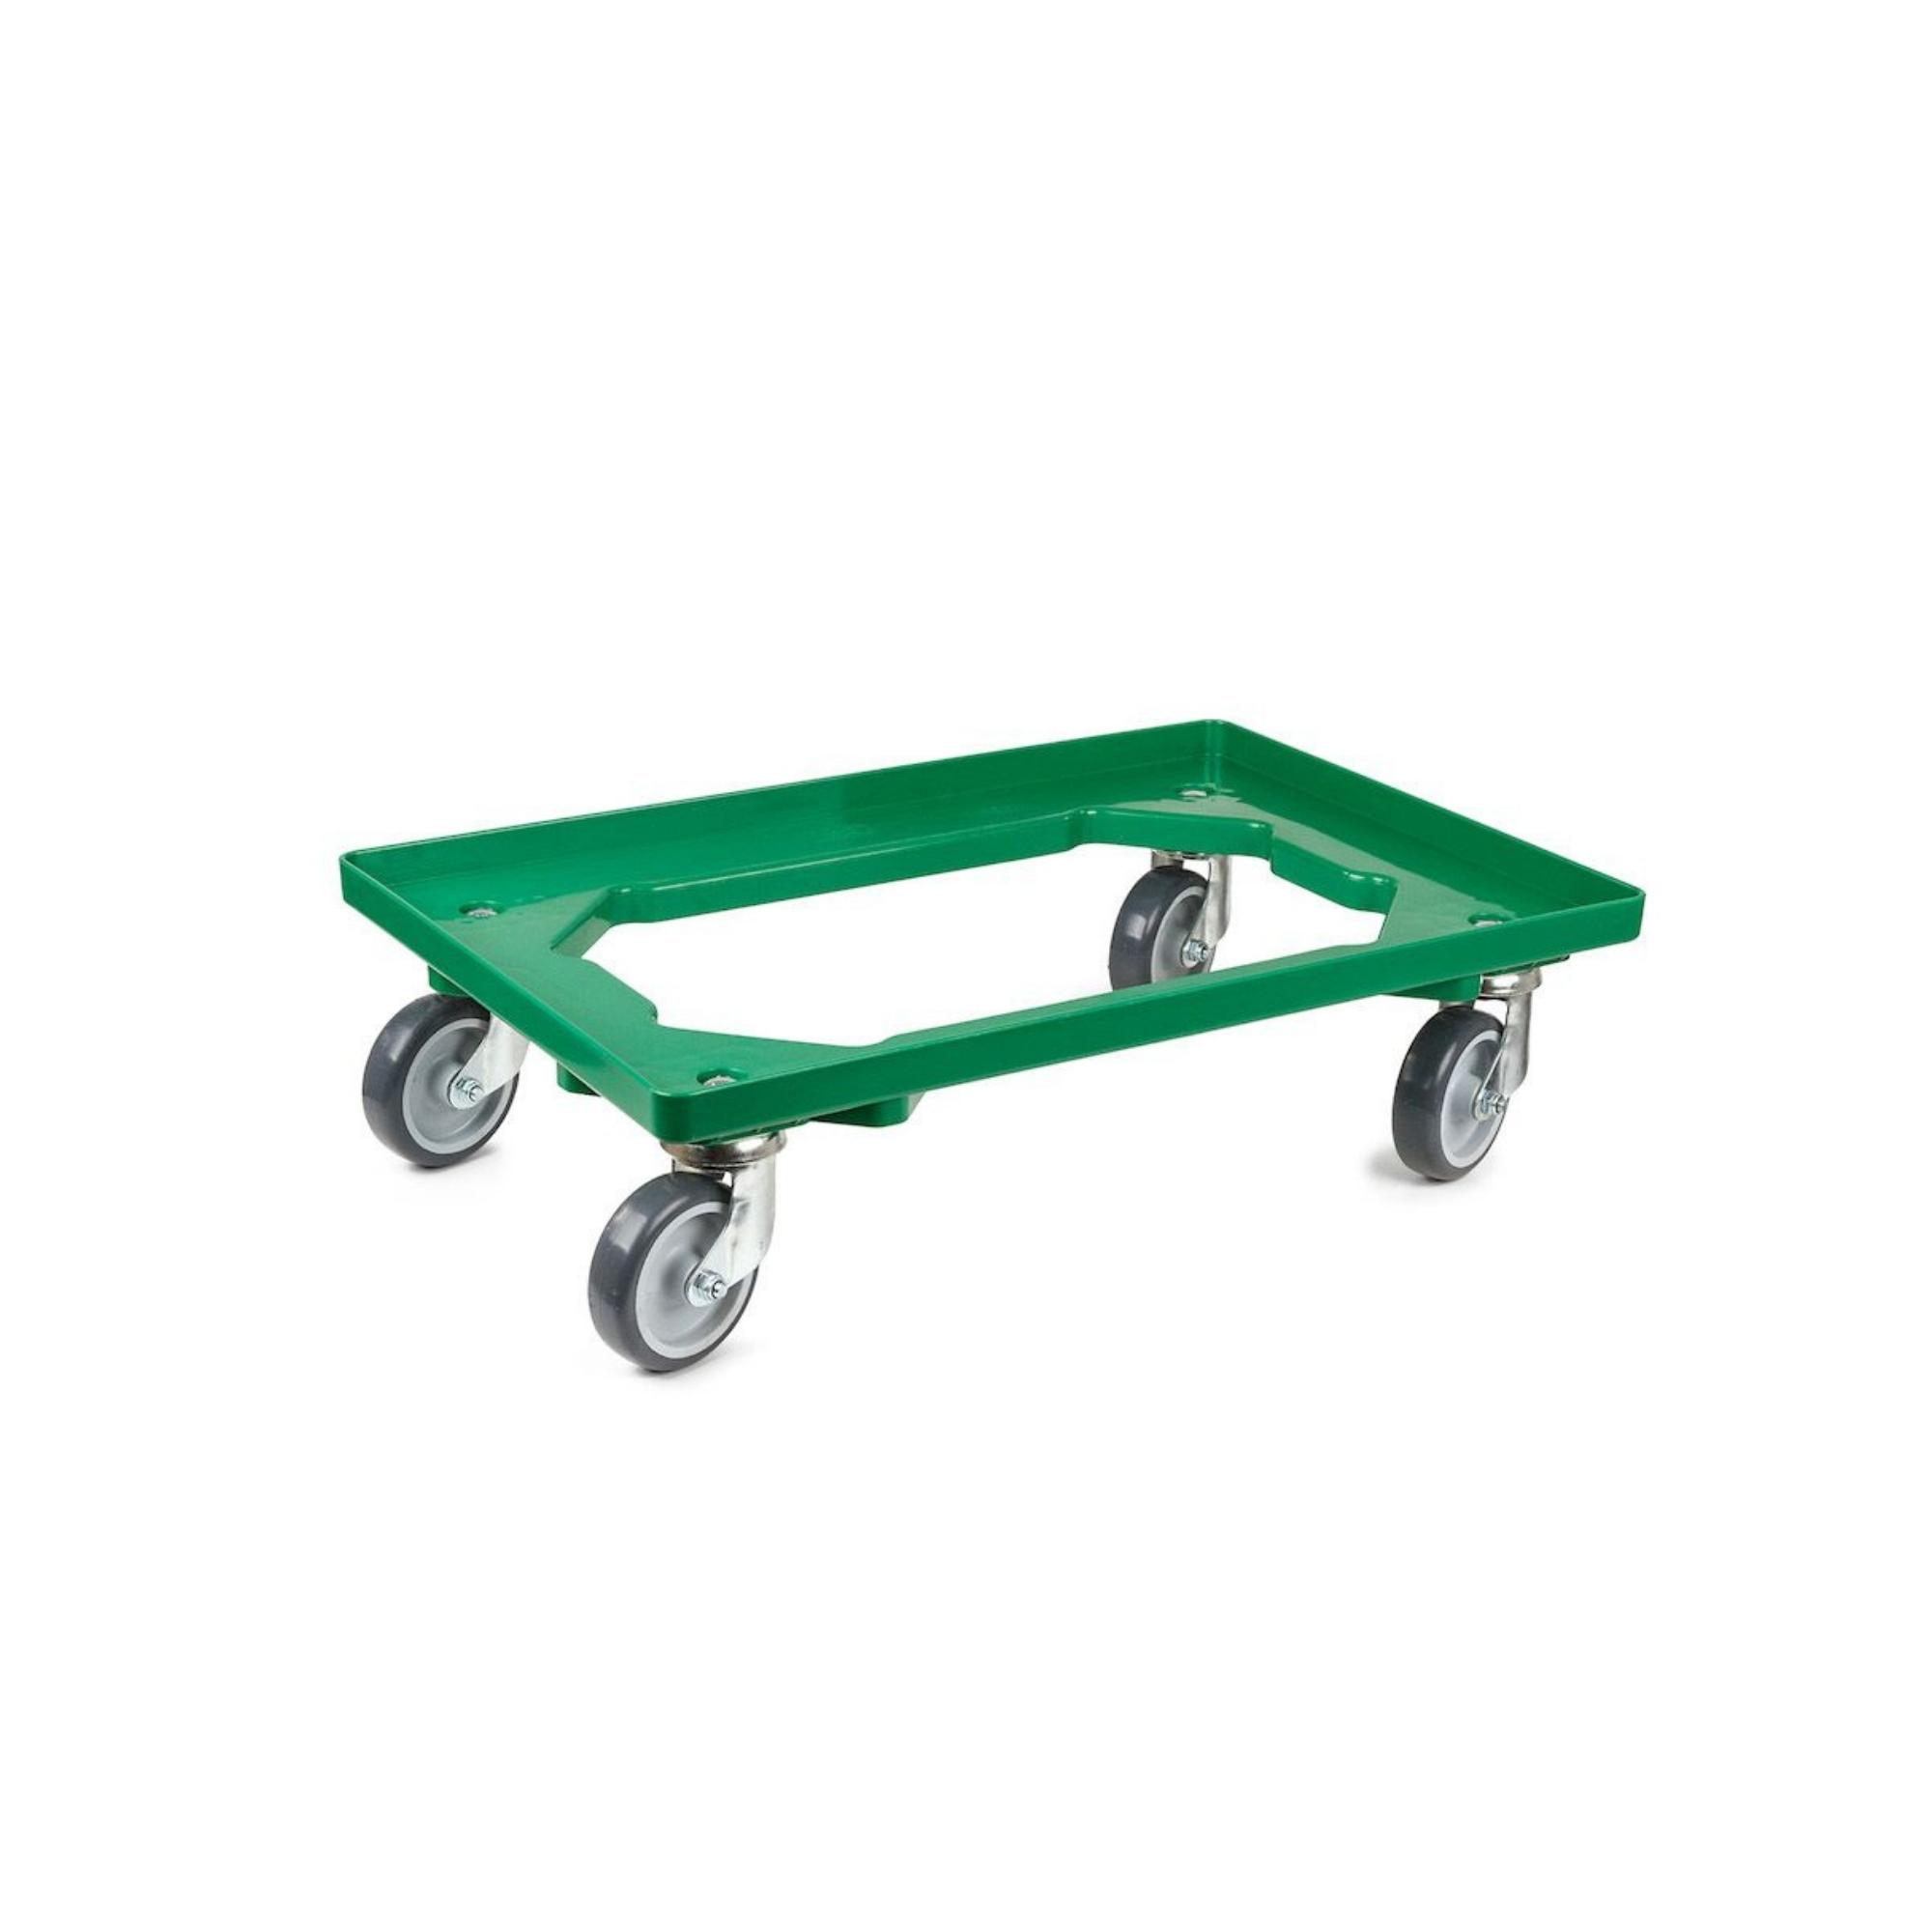 SparSet 2x Transportroller für Euroboxen 60x40cm mit Gummiräder grün | Offenes Deck | 2 Lenkrollen & 2 Bockrollen | Traglast 300kg | Kistenroller Logistikroller Rollwagen Profi-Fahrgestell